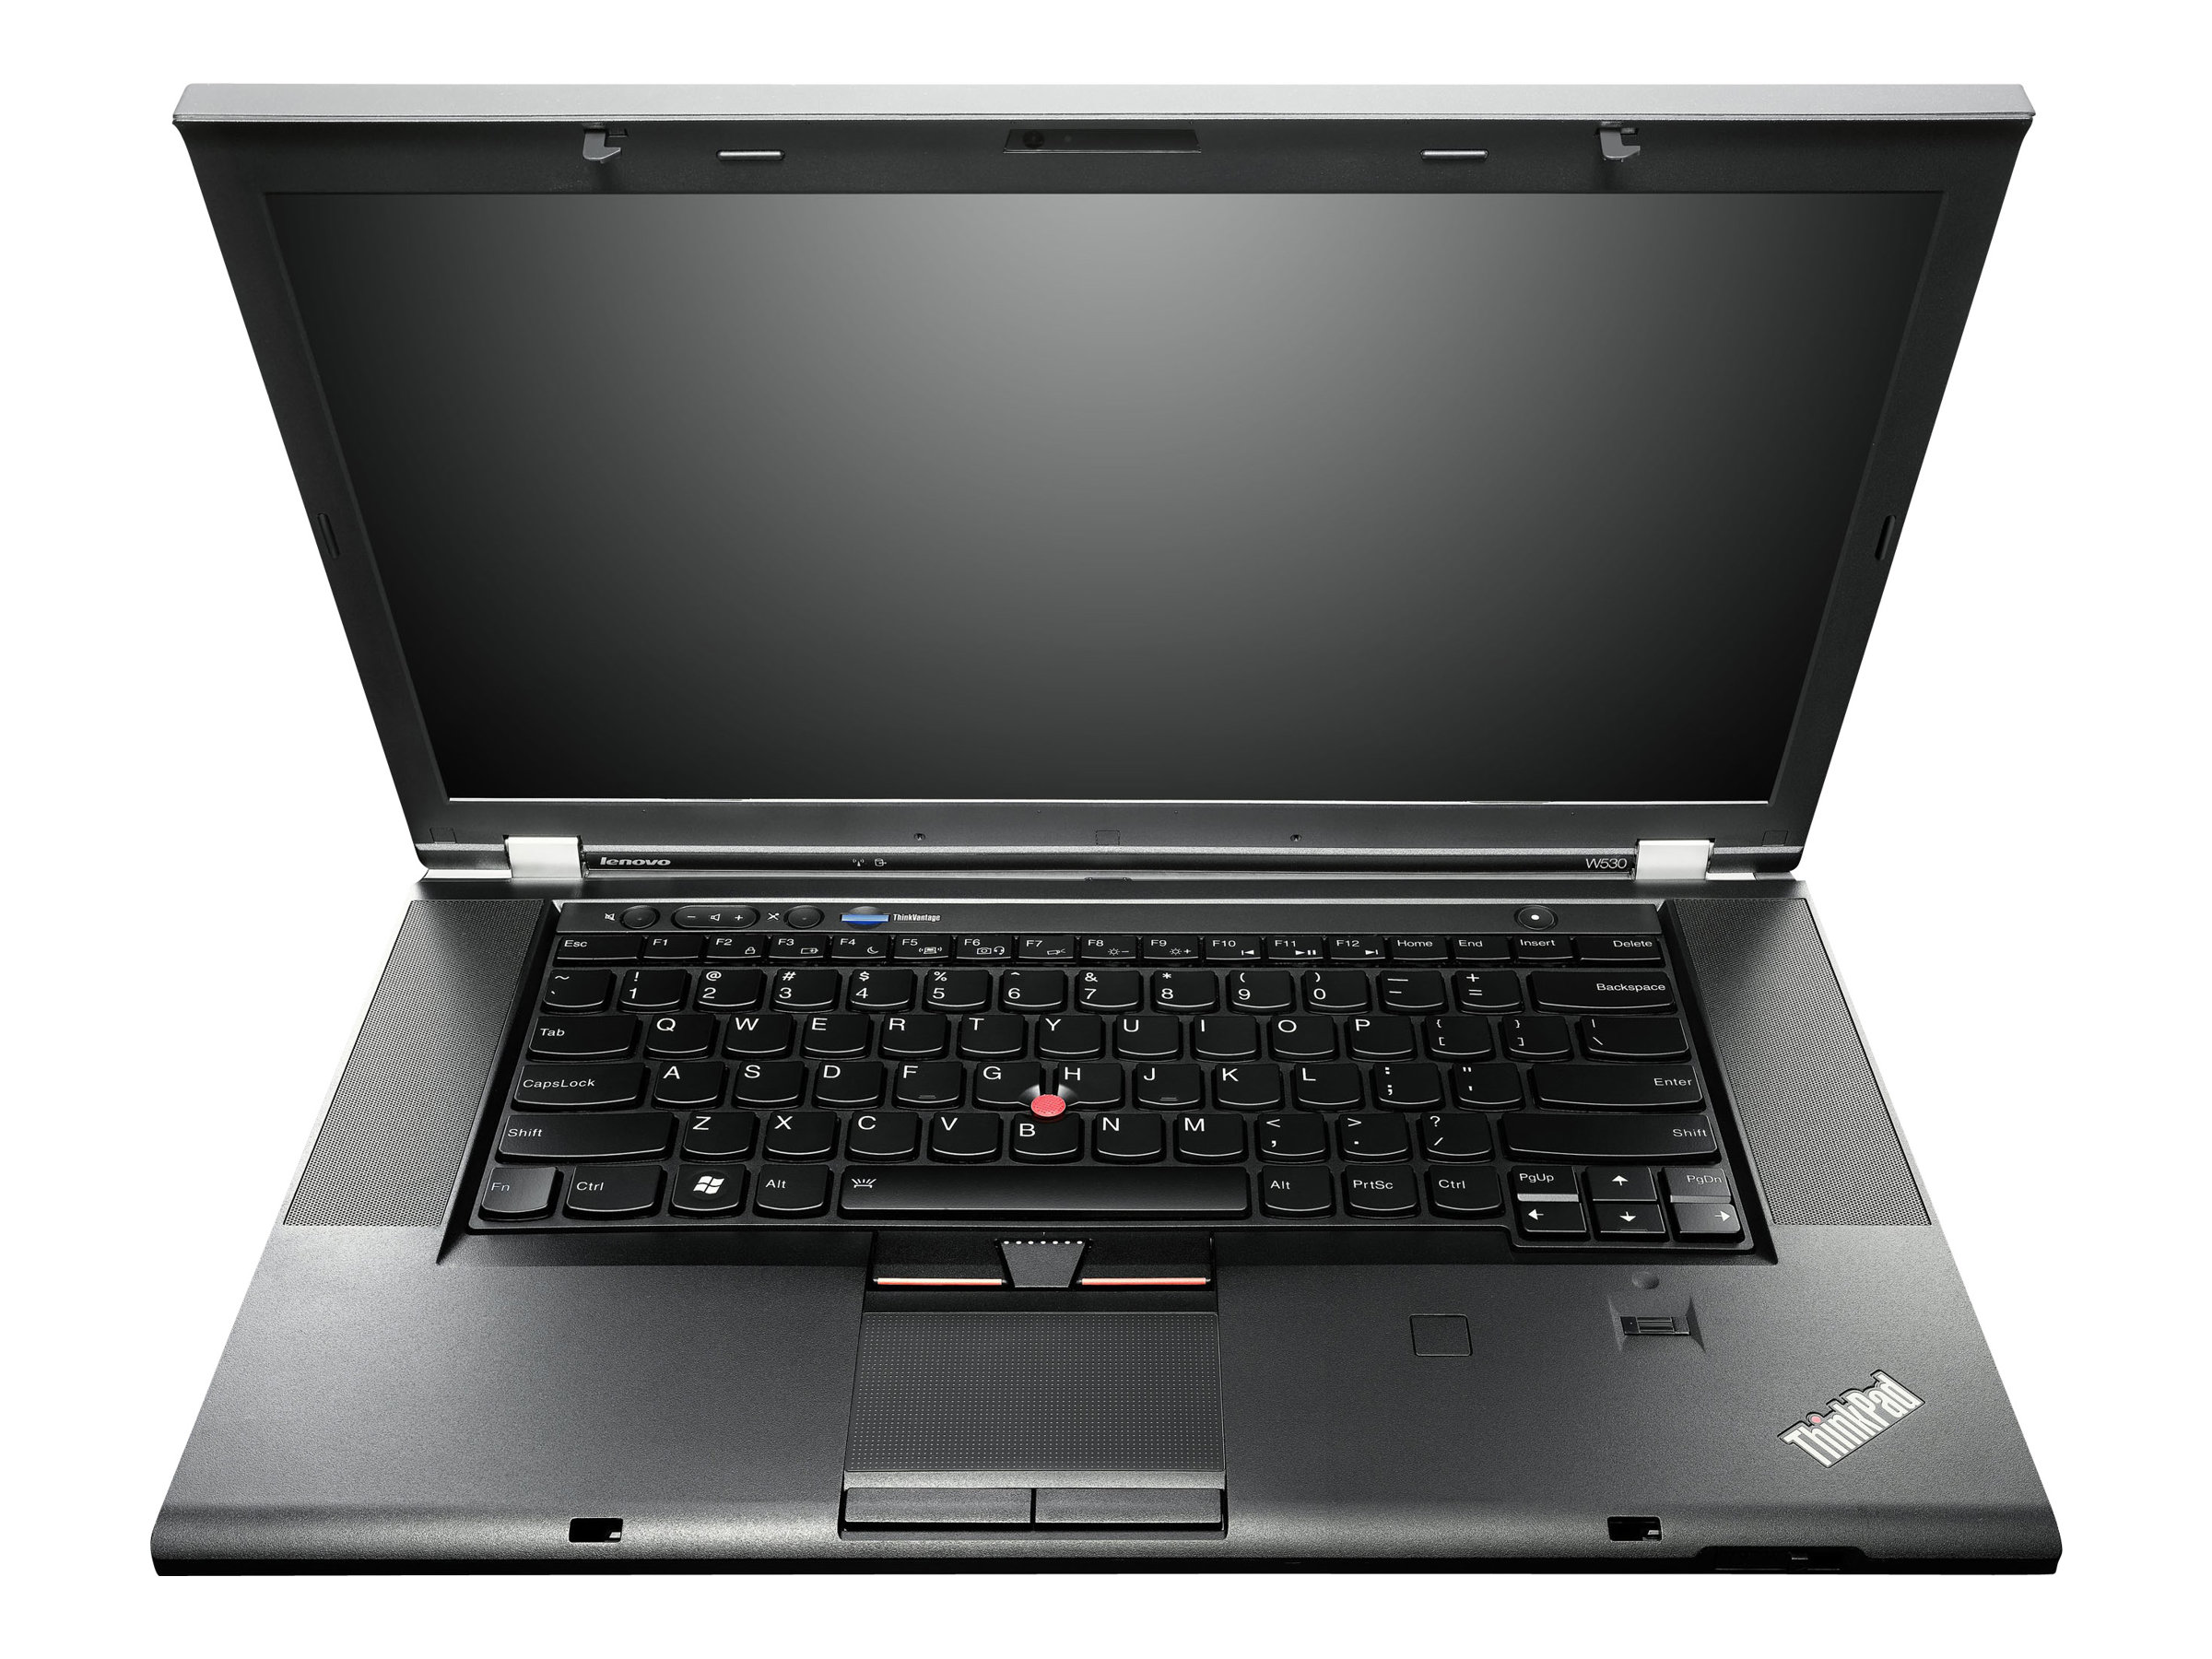 Lenovo ThinkPad W530 (2447)